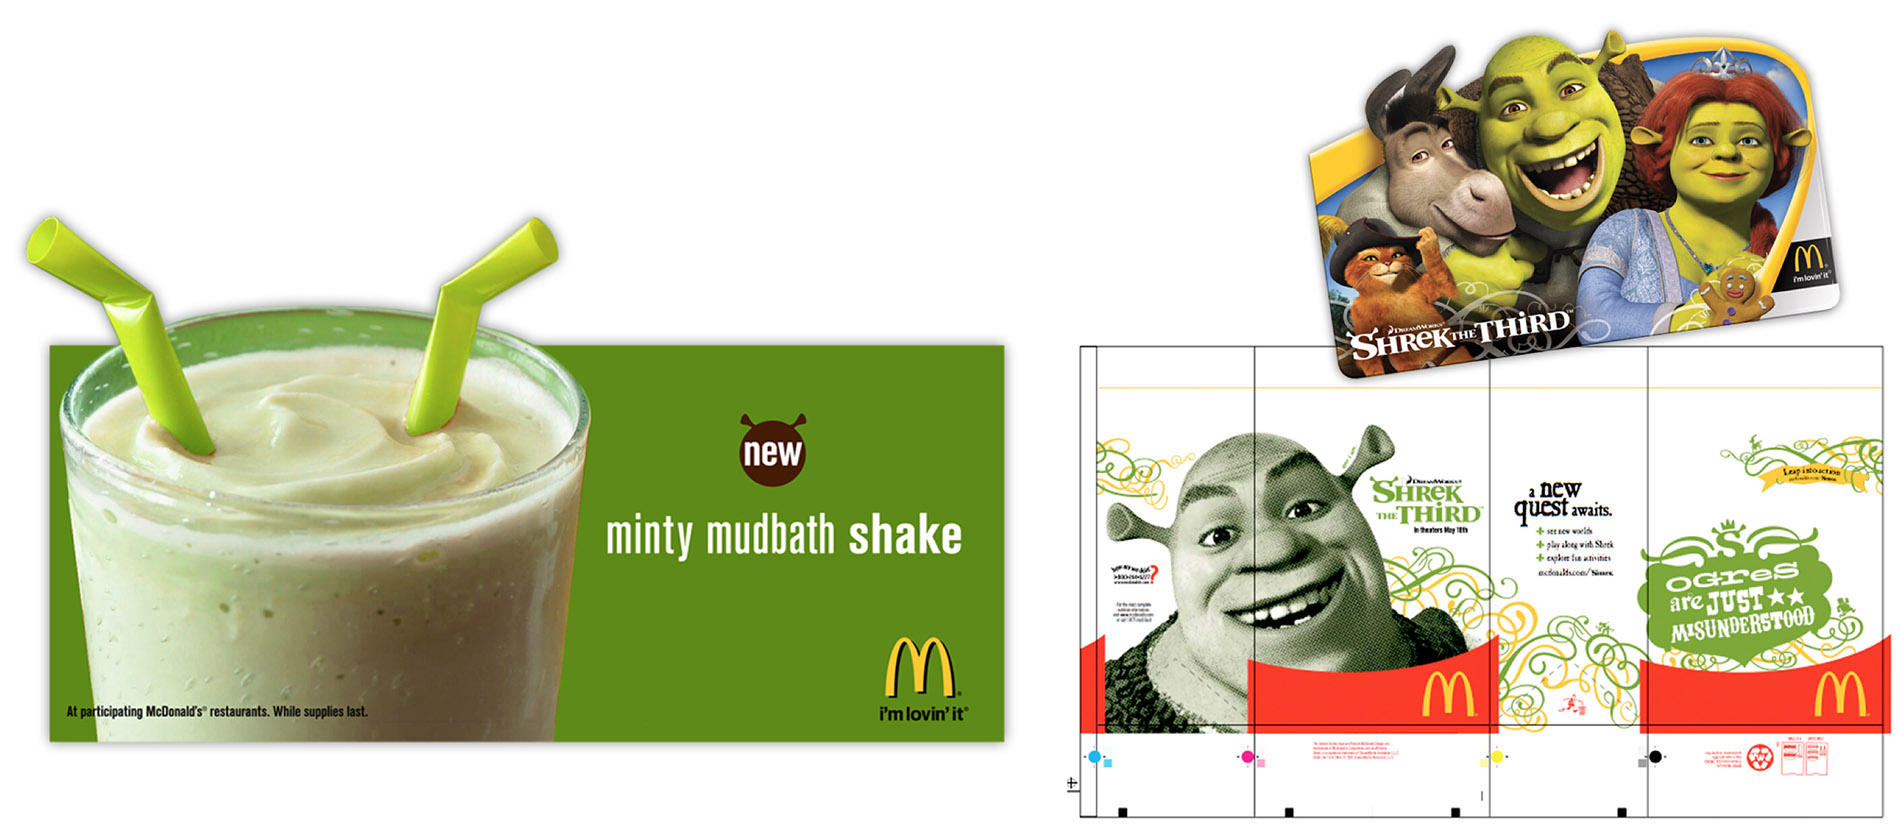 McDonalds, Shrek the Third